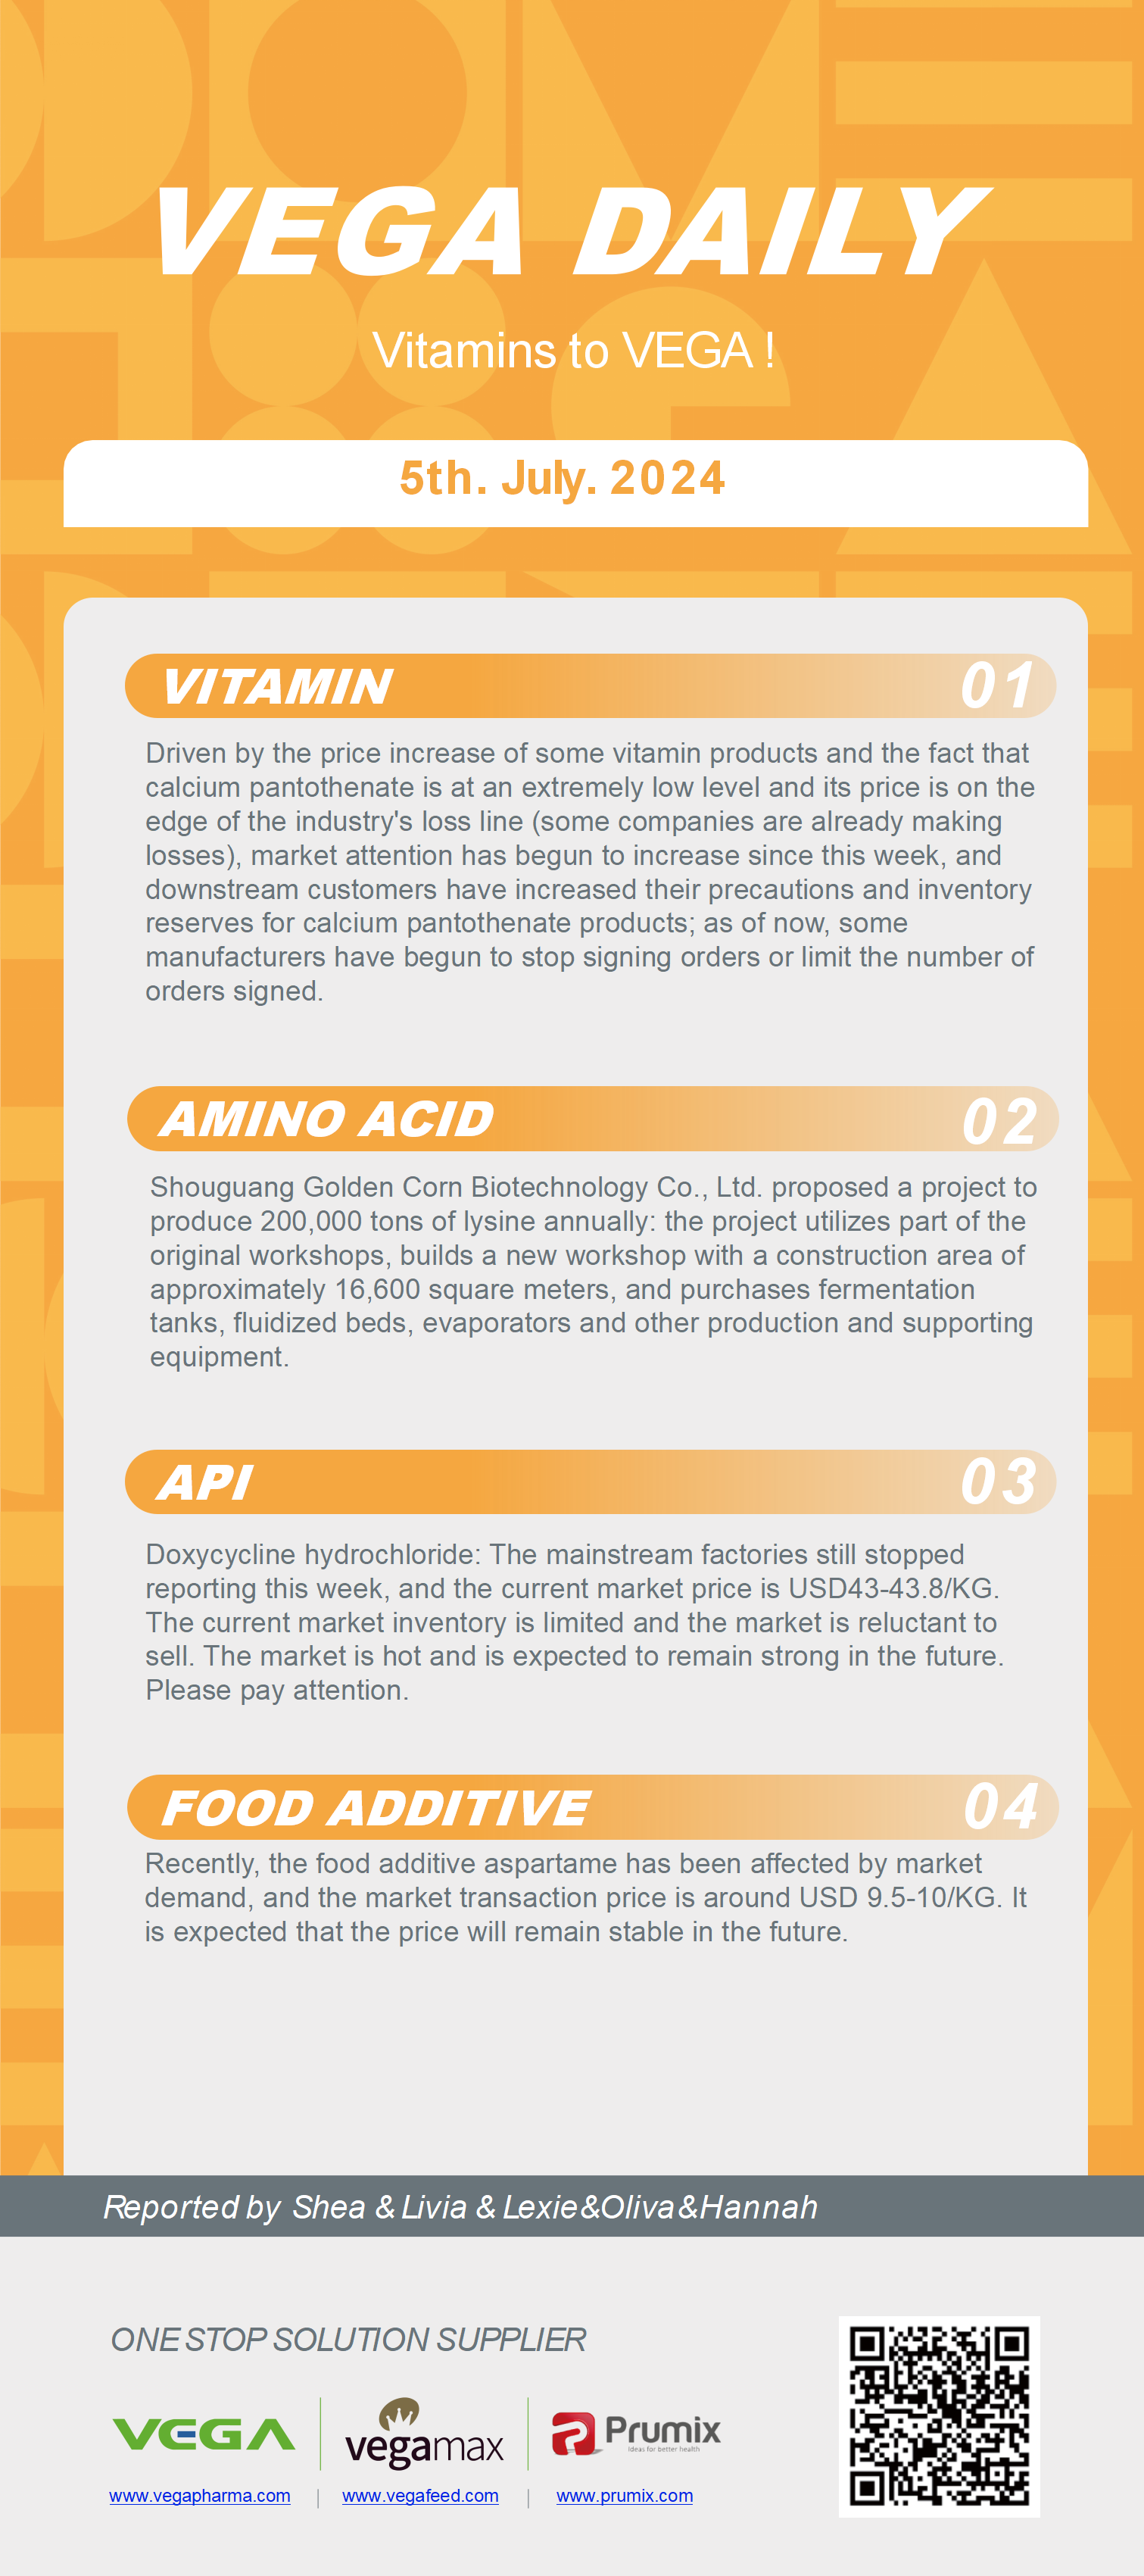 Vega Daily Dated on Jul 5th 2024 Vitamin Amino Acid APl Food Additives.png